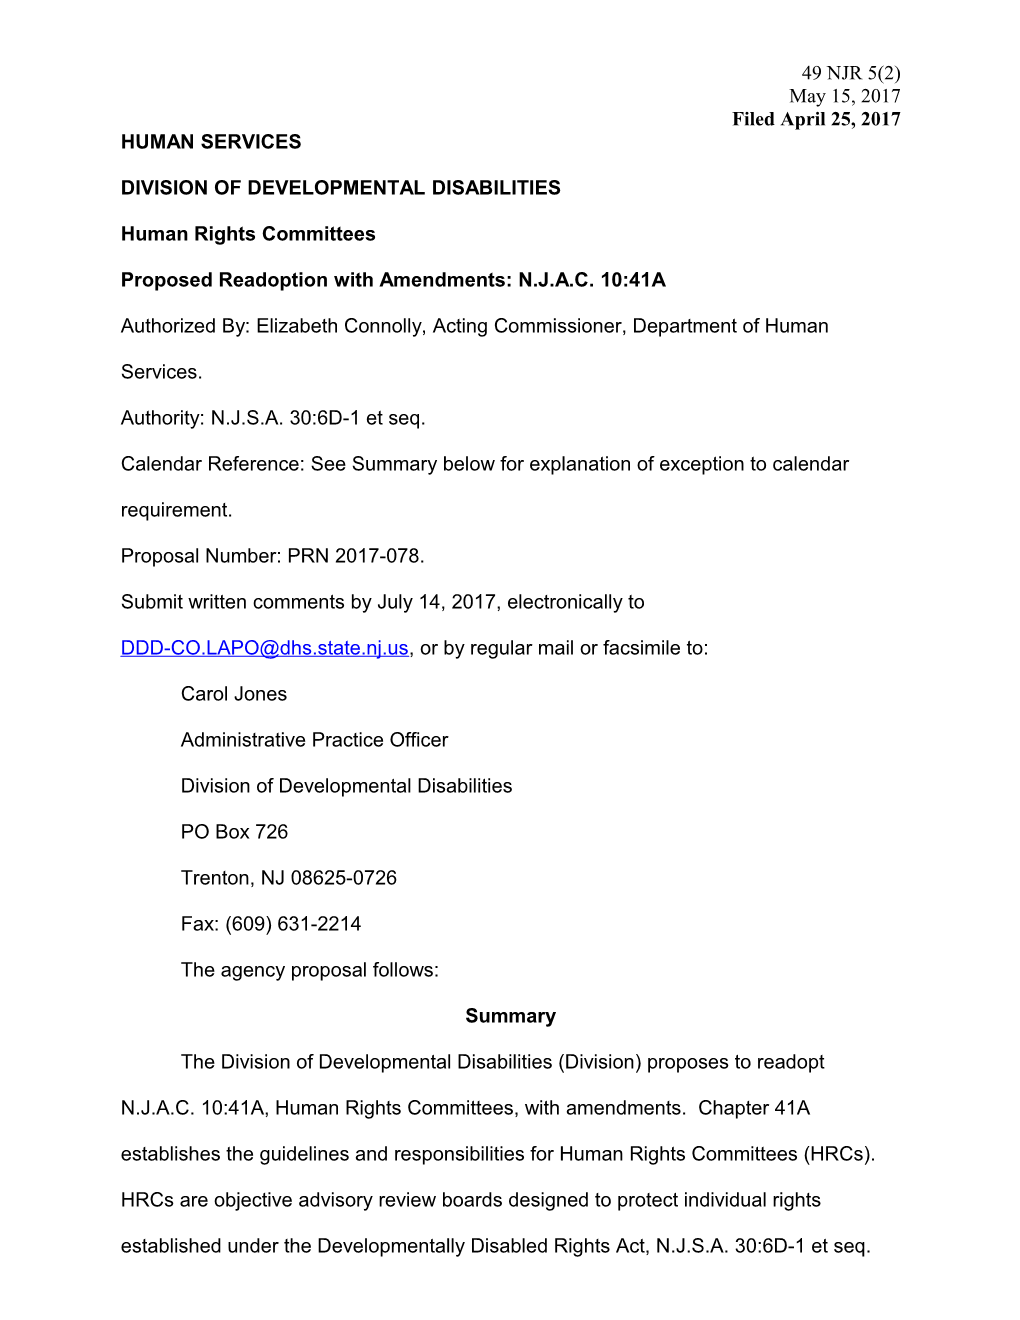 Proposed Readoption with Amendments: N.J.A.C. 10:41A